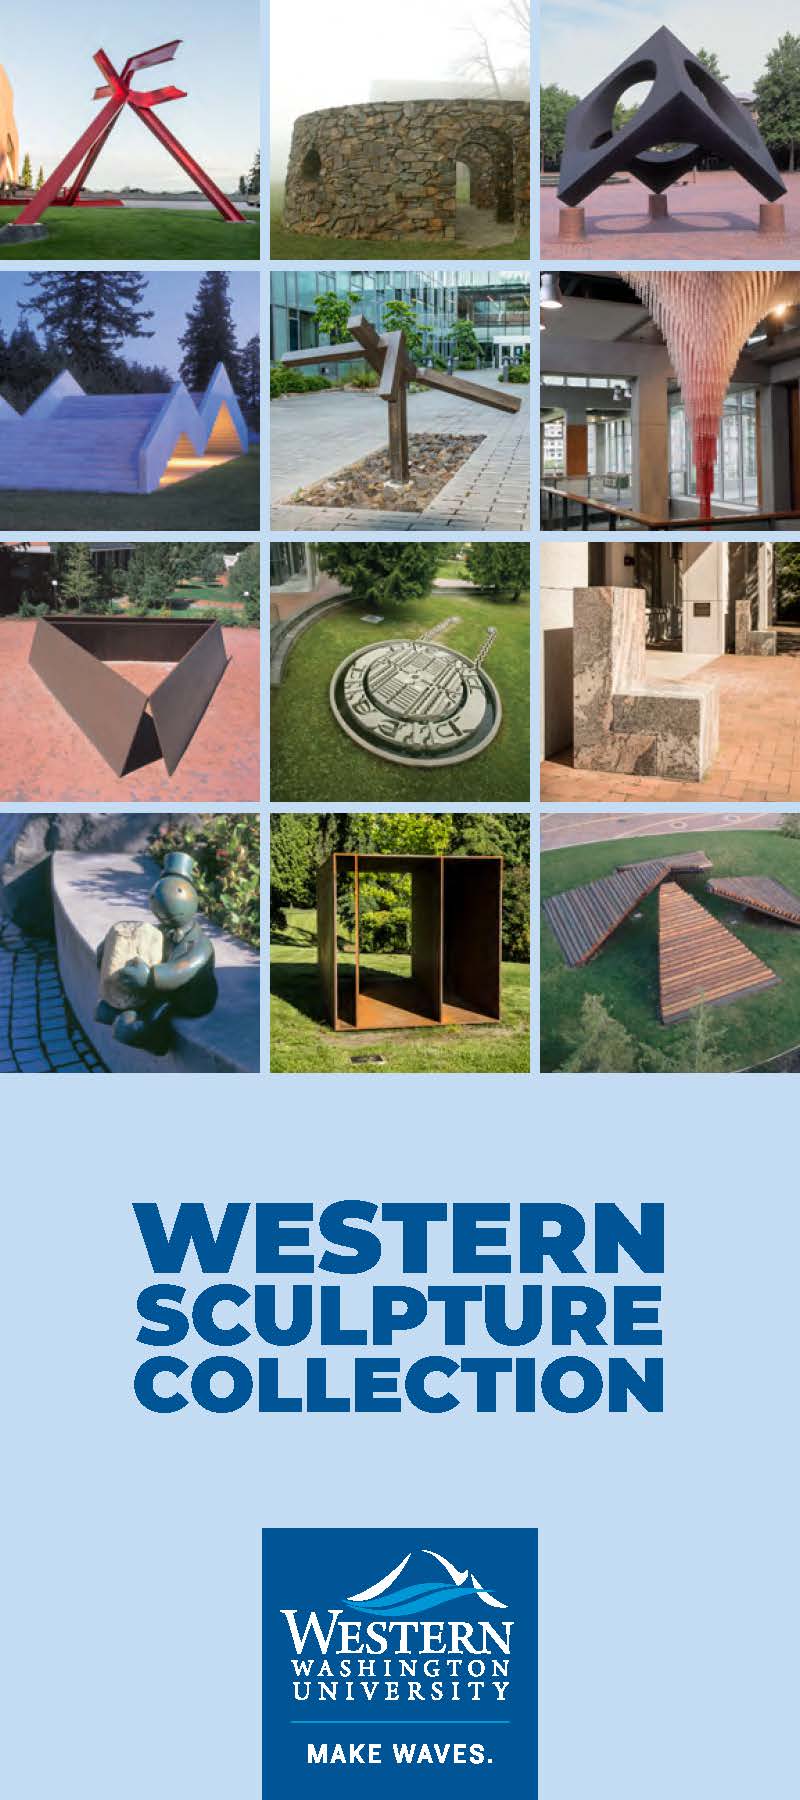 10 images of WWU outdoor sculptures from the Western Gallery Outdoor Sculpture brochure